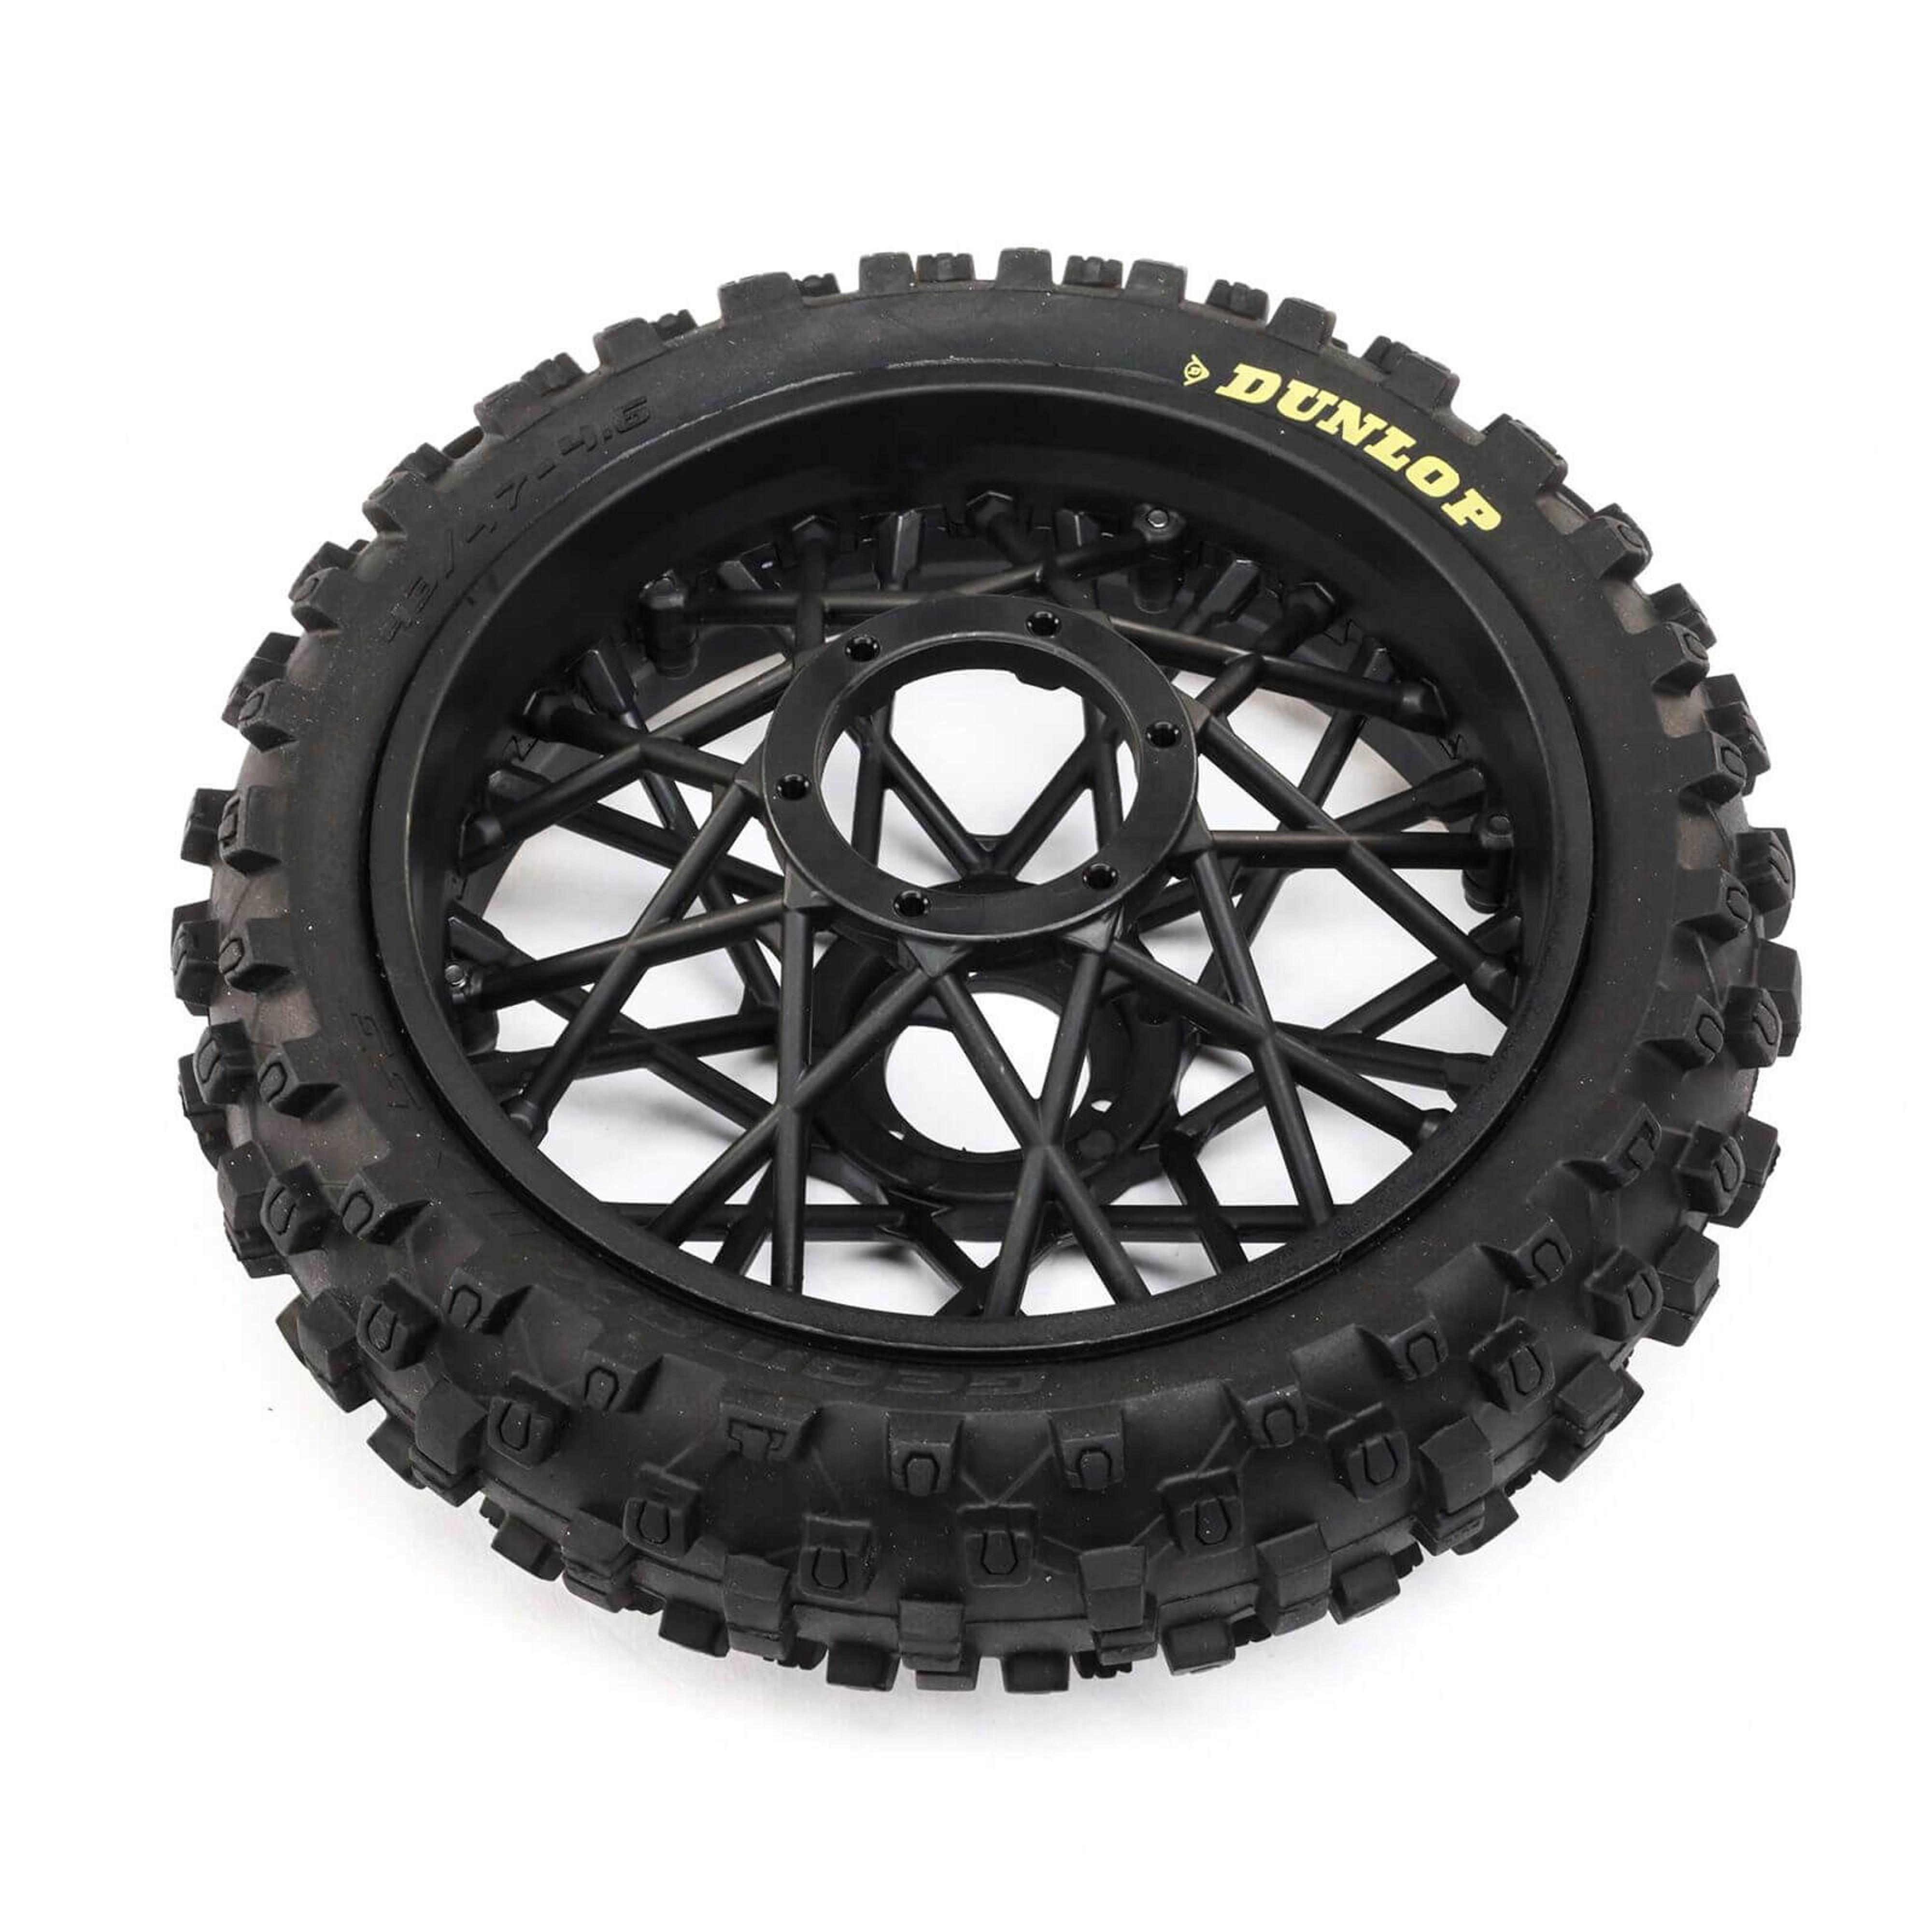 Dunlop MX53 Rear Tire Mounted: Promoto-MX